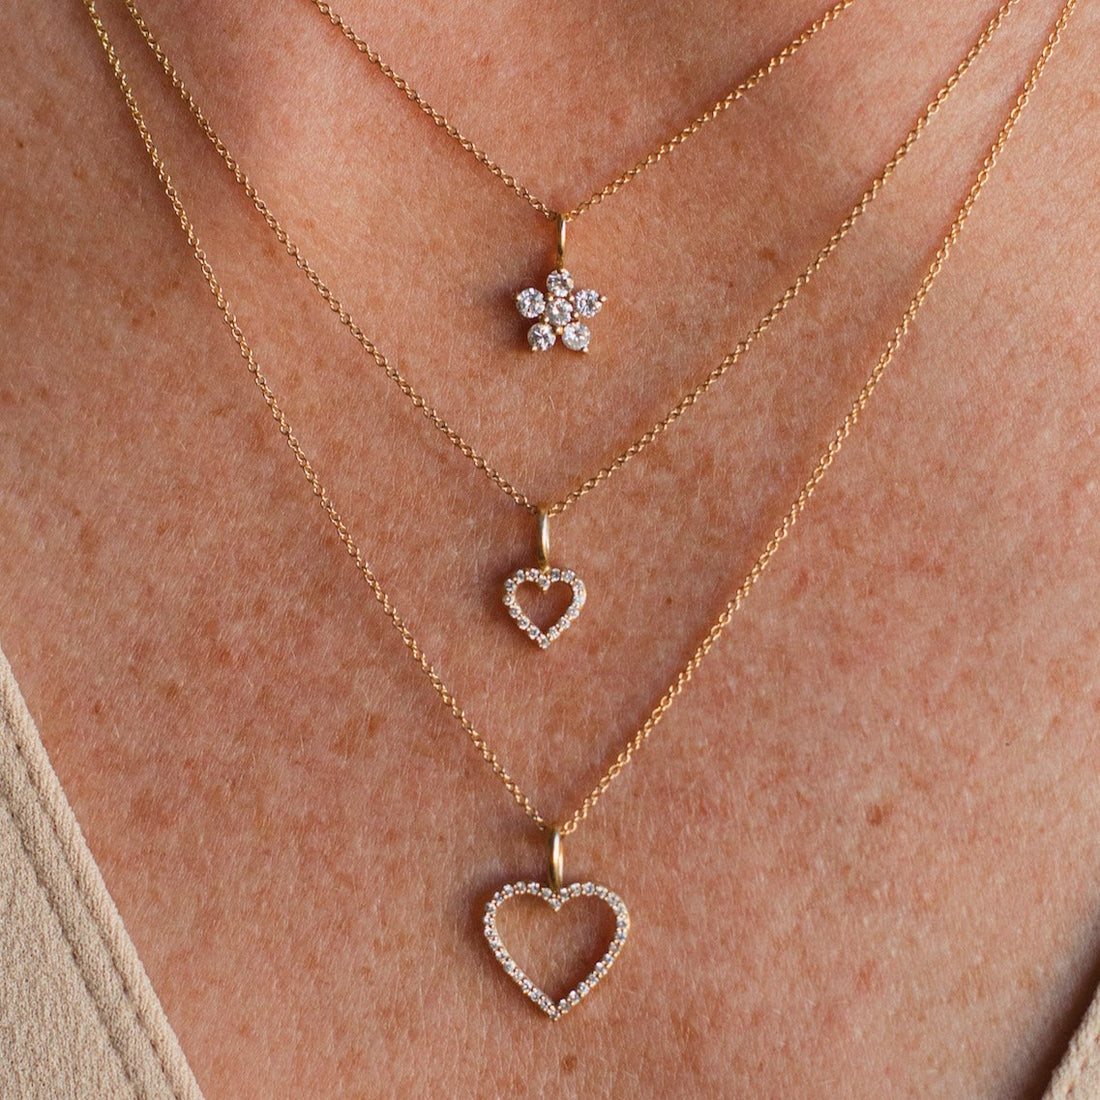 Amy Diamond Flower Necklace, 18K Gold / White Gold